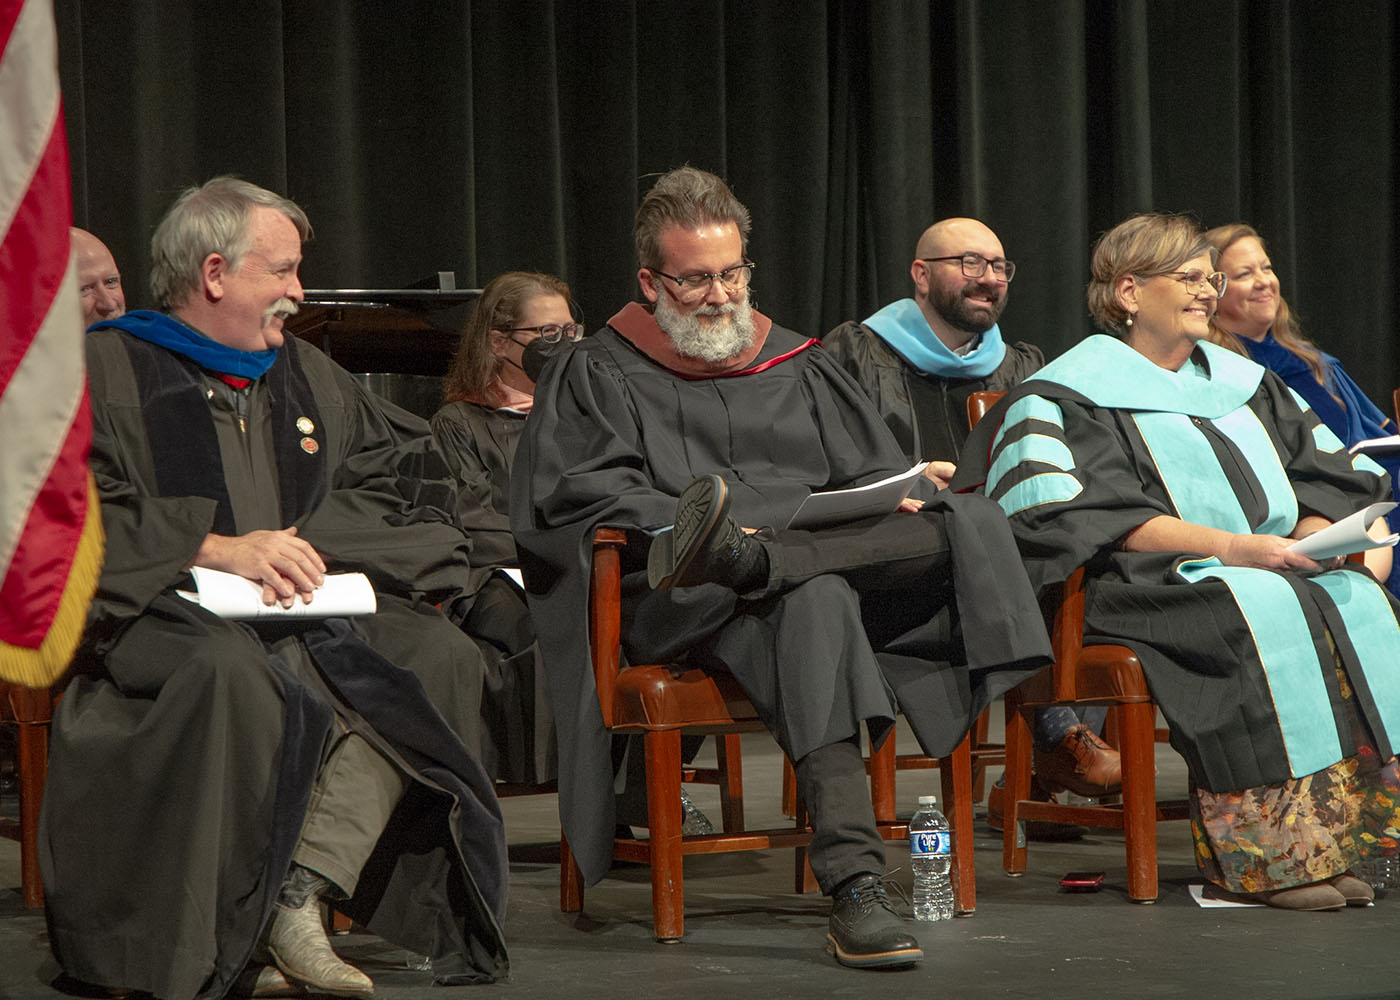 Blackburn professors James Bray Jr., Craig Newsom, and Cindy Carlson Rice seated during an award ceremony.